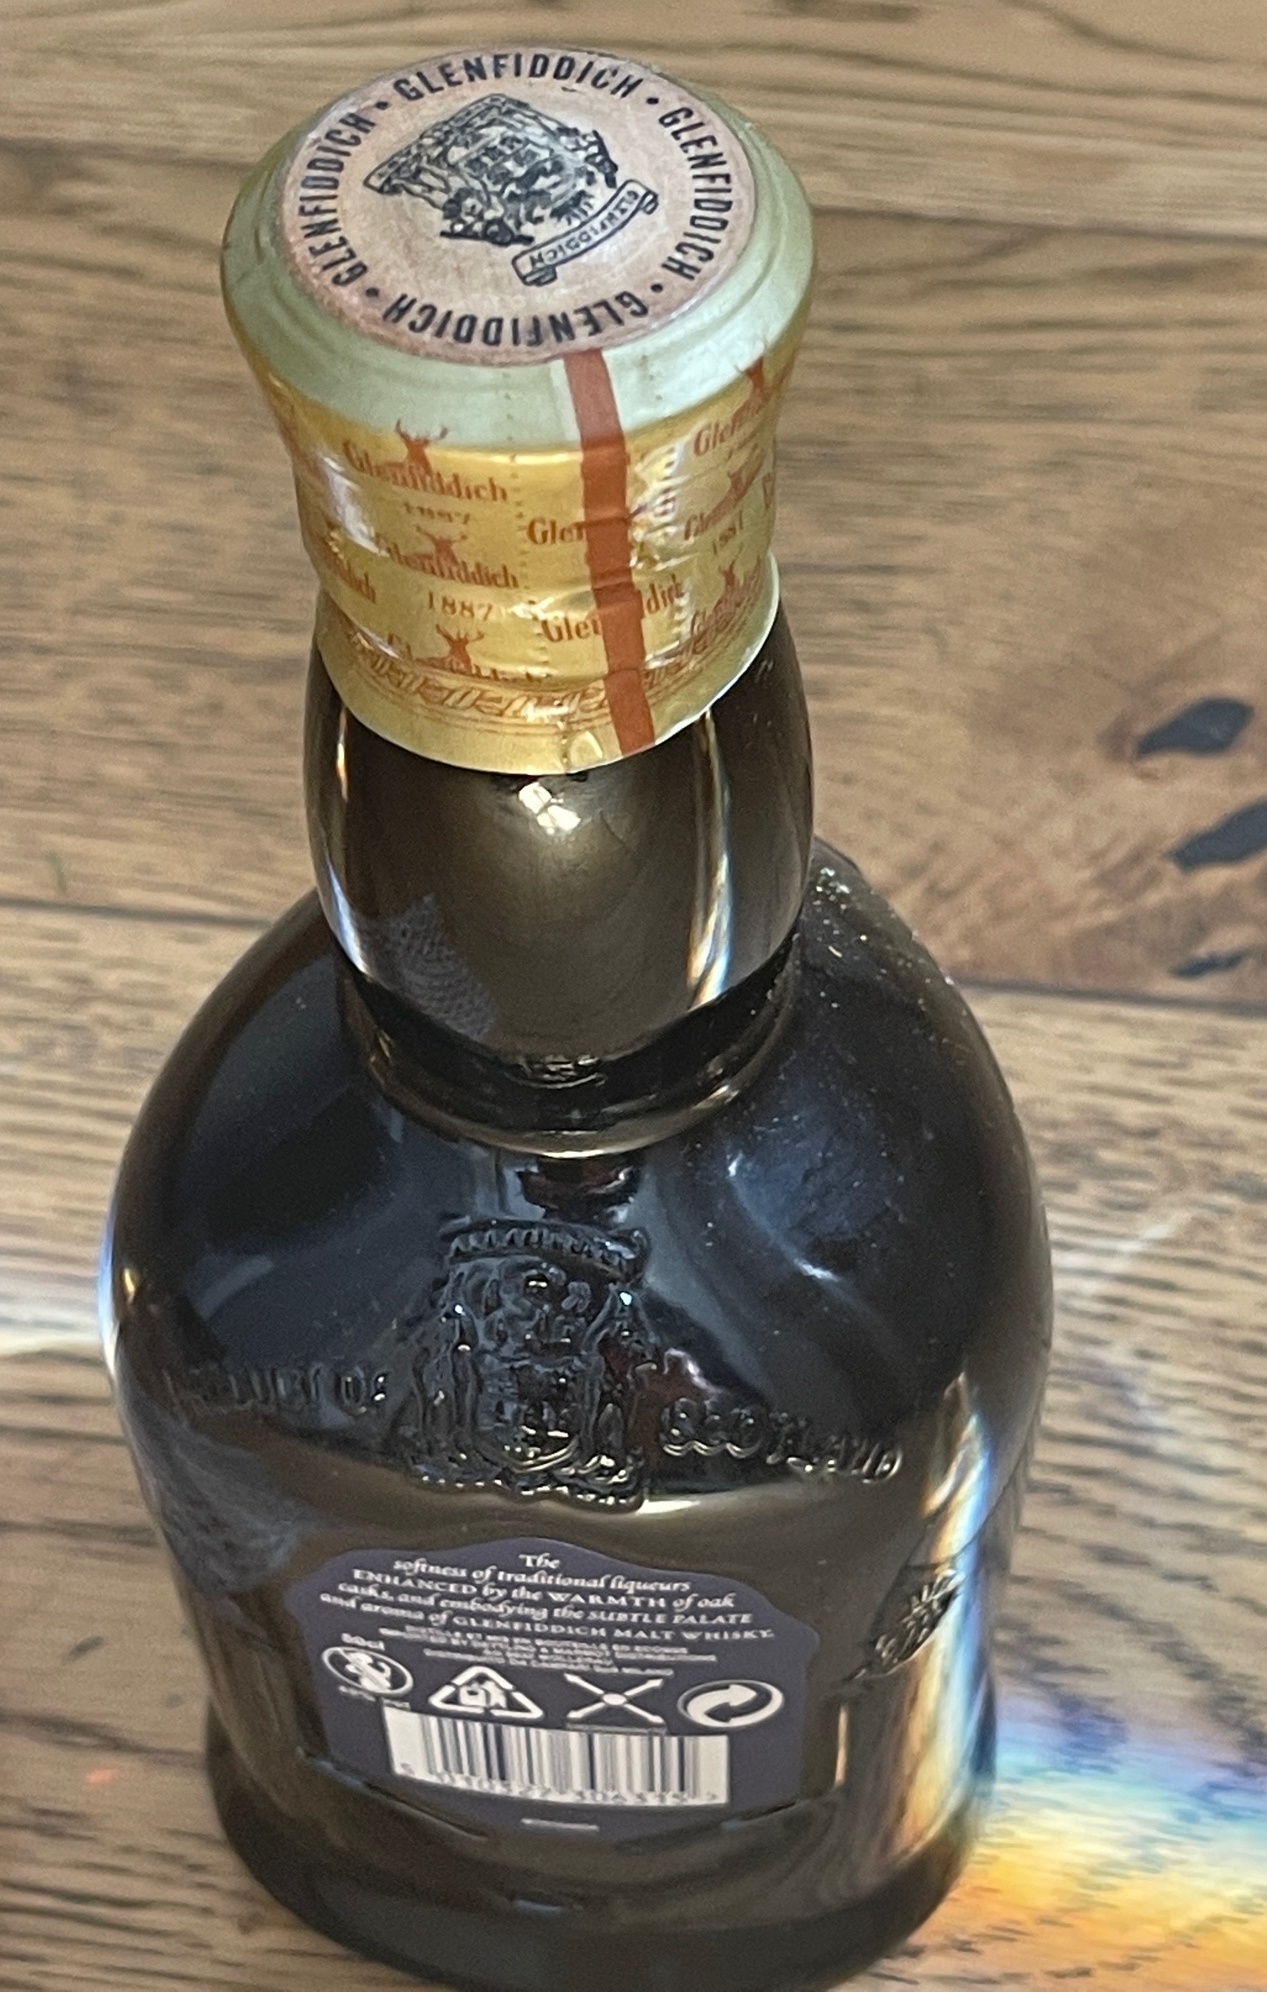 Bottle of Glenfiddich Malt Whisky Liquer - Bottle 1 of 5. - Image 4 of 5